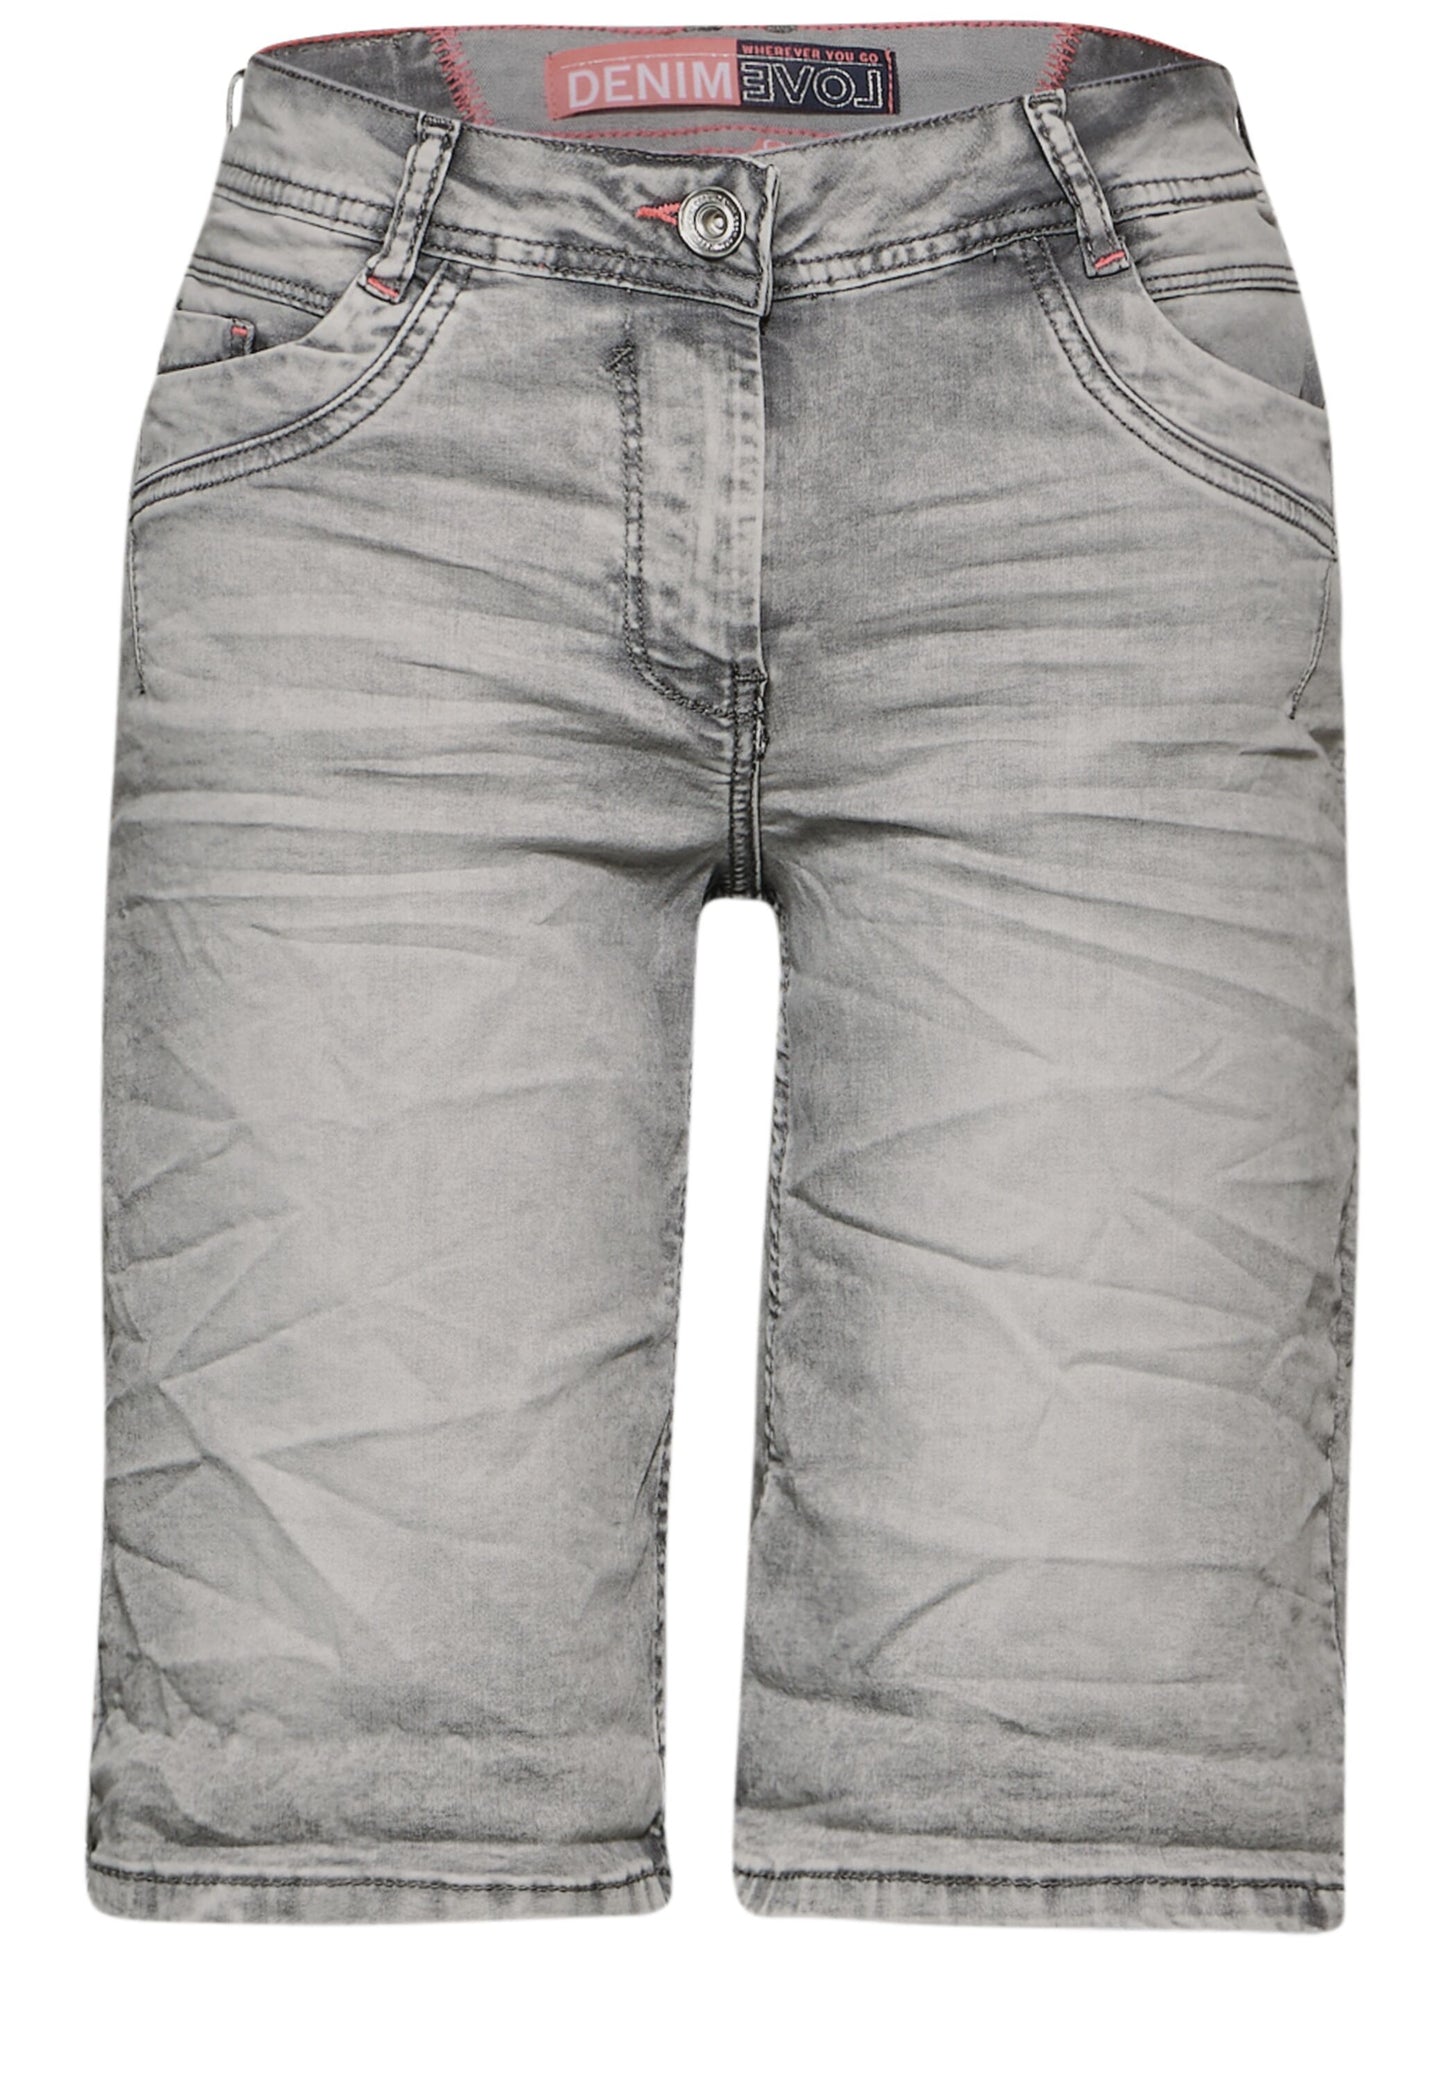 CECIL - Jeans Shorts - grau - Style Scarlett